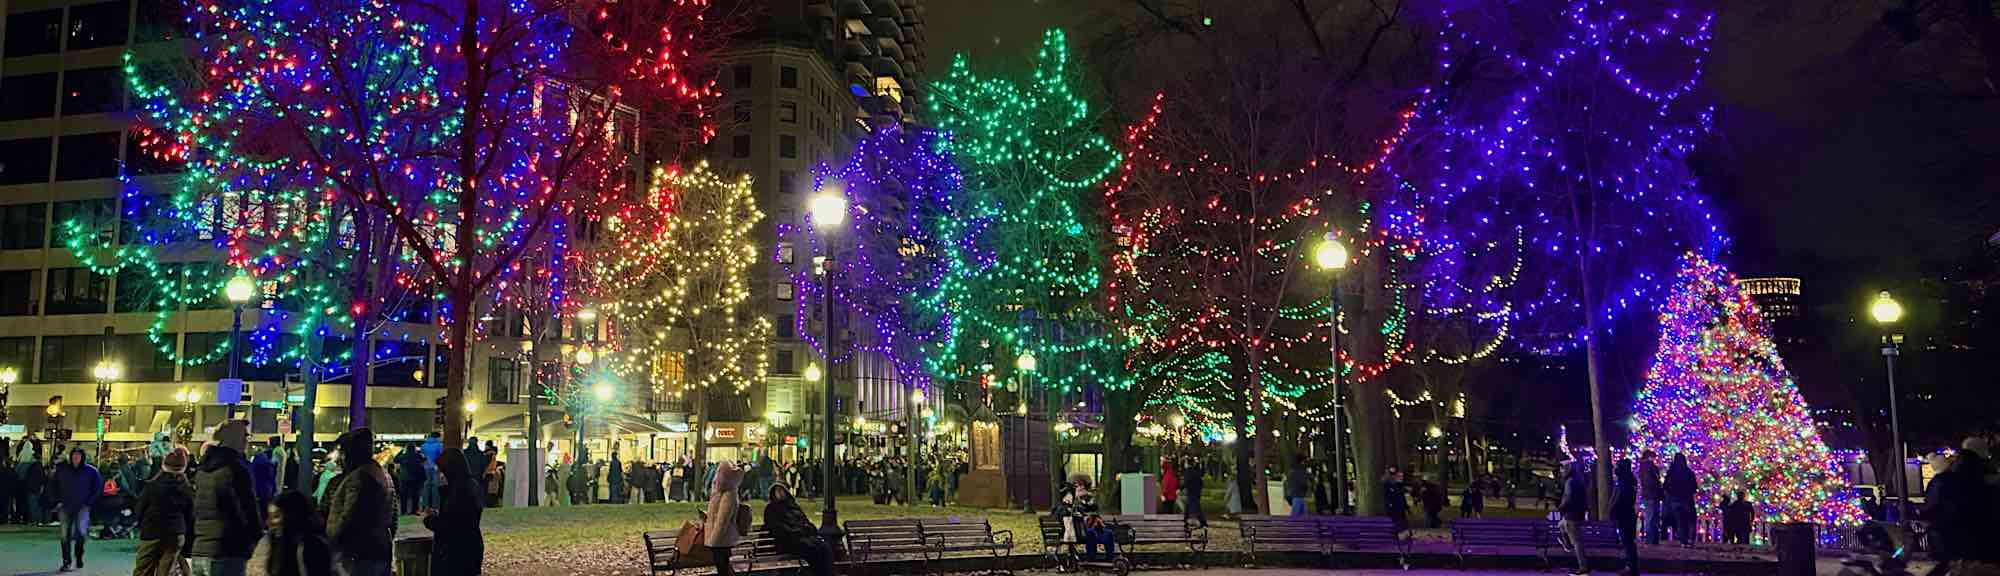 Christmas lights on the Common